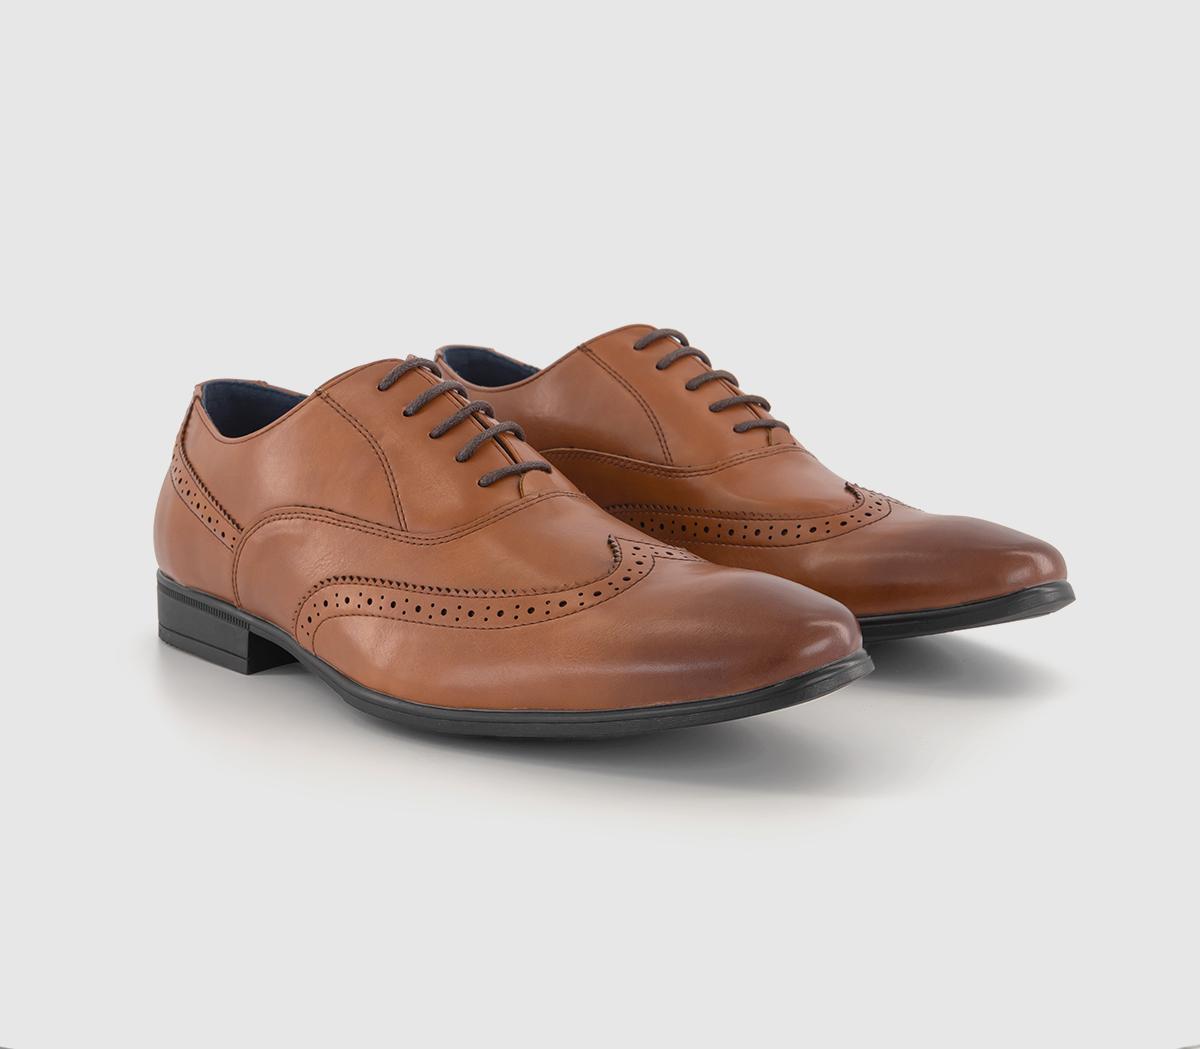 OFFICE Mens Martel Wingtip Oxford Shoes Tan, 7